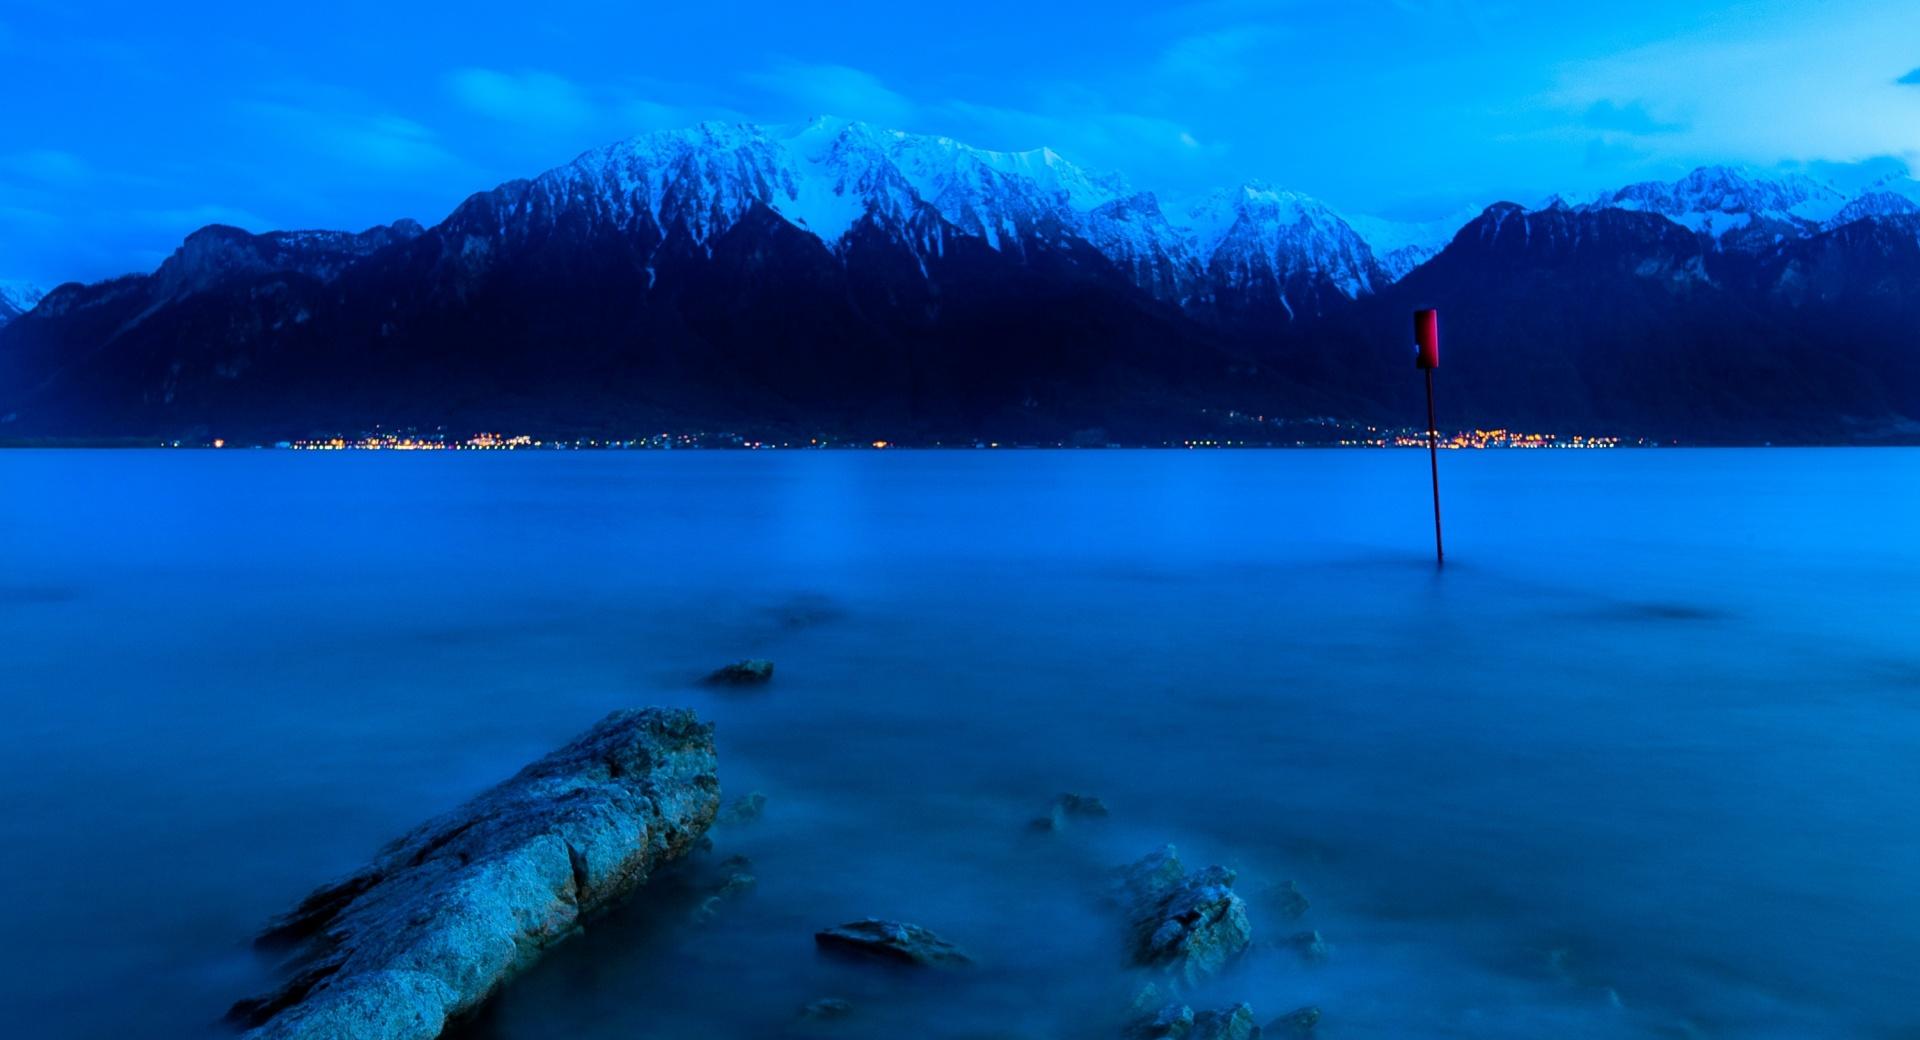 Lake At Night at 1280 x 960 size wallpapers HD quality